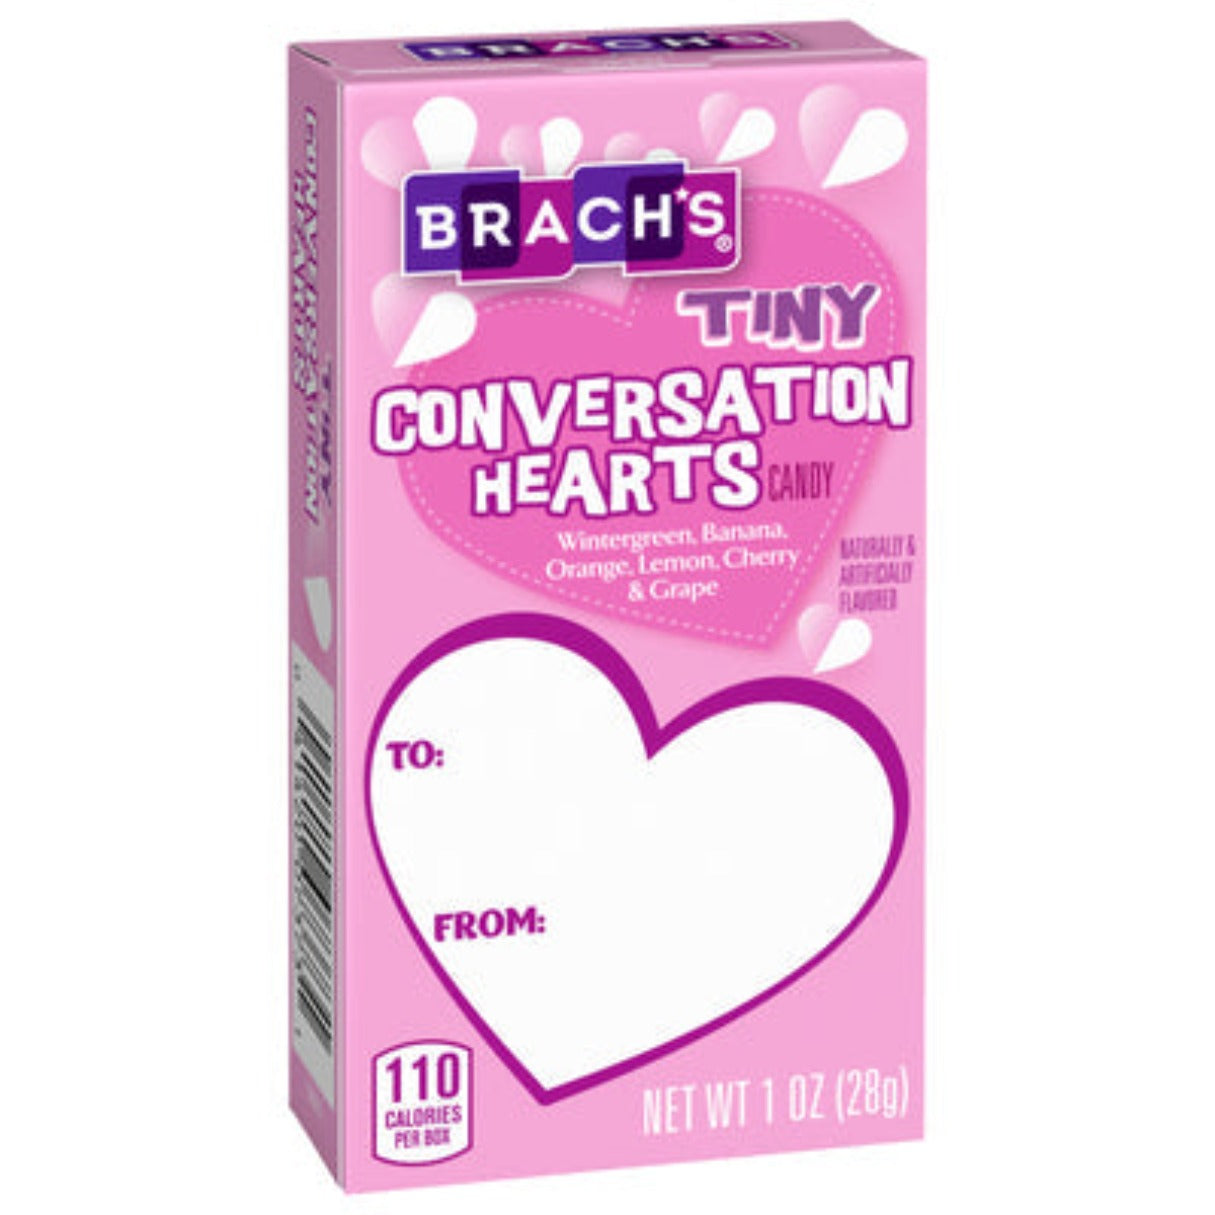 Brach's Tiny Conversation Hearts Box 1oz - 12ct